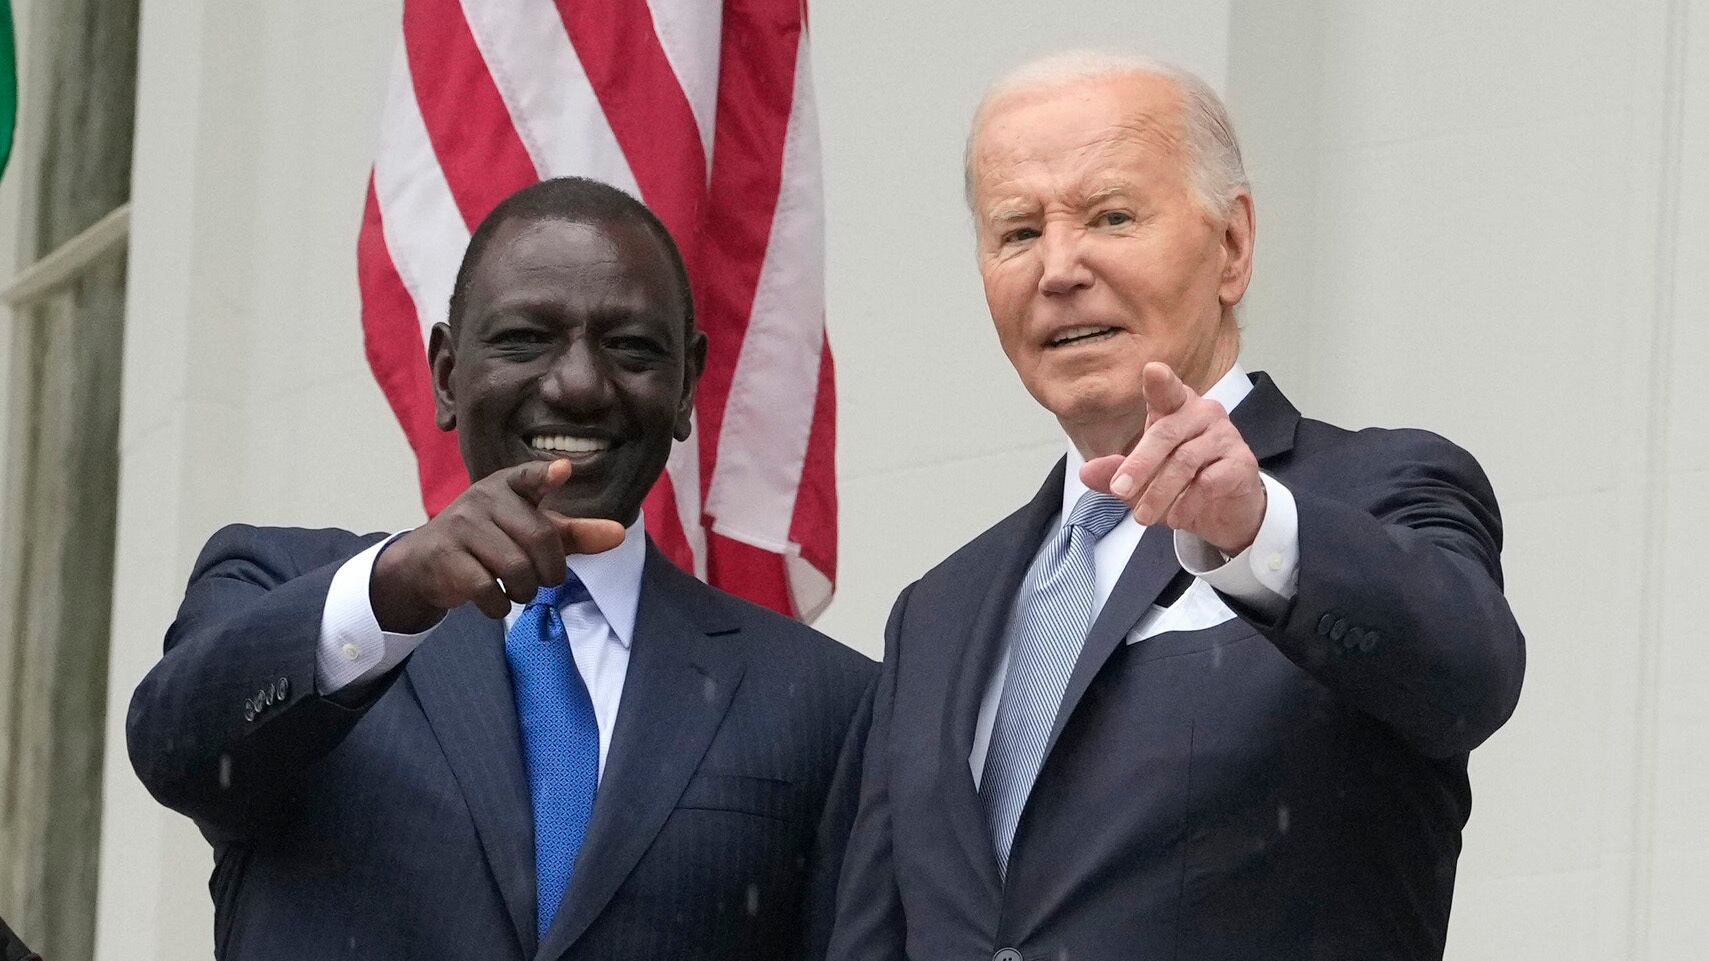 US President Joe Biden and Kenya’s President William Ruto at the White House (Jacquelyn Martin/AP)